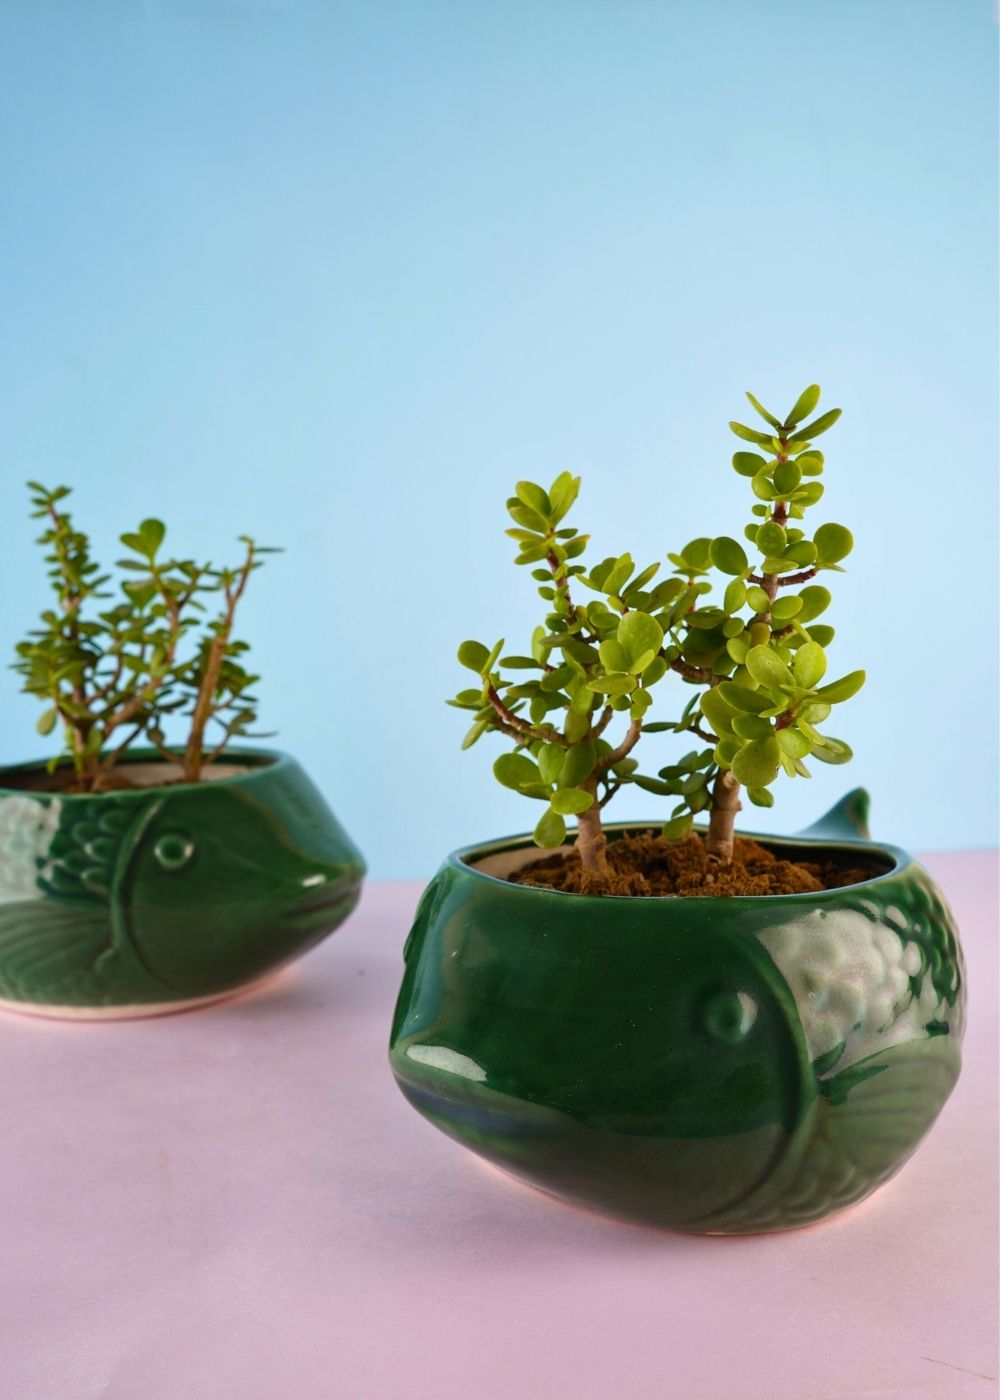 green catfish planter made by ceramic